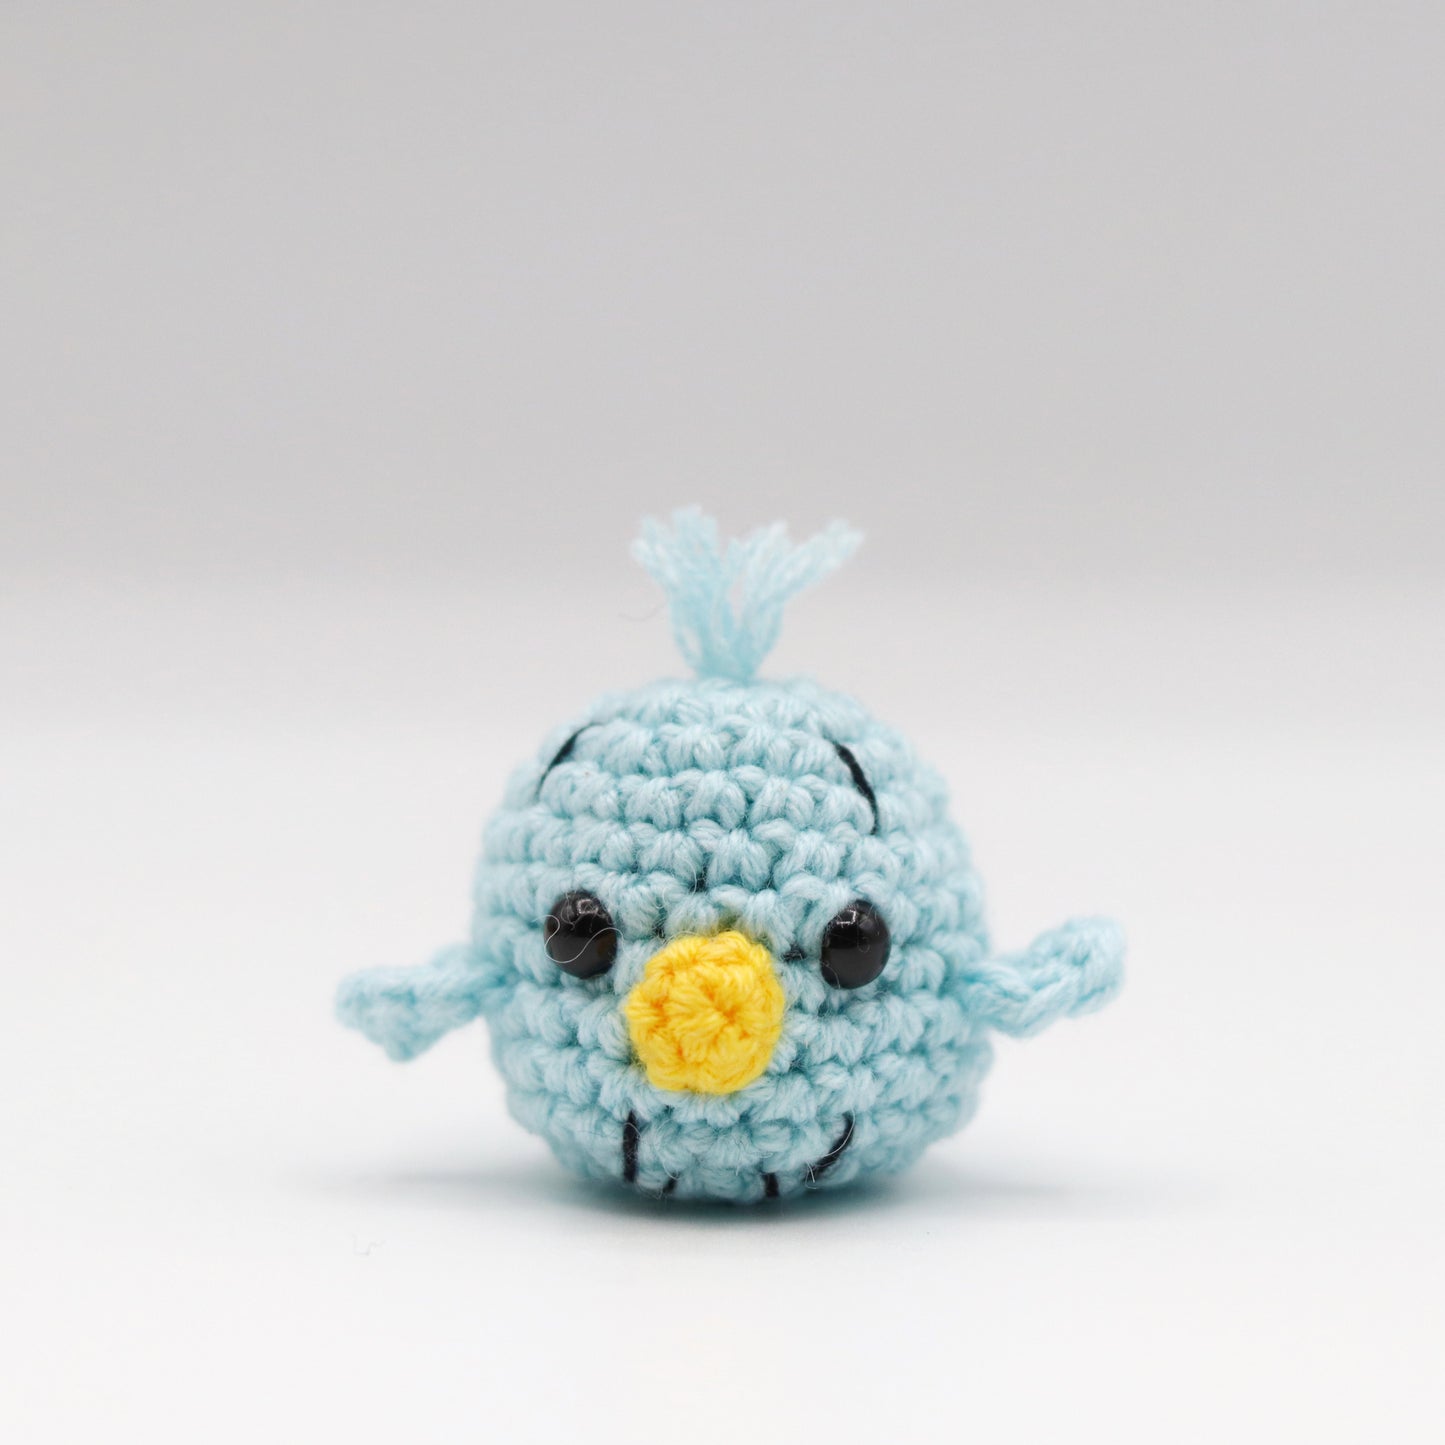 Handmade crochet mini animal toys